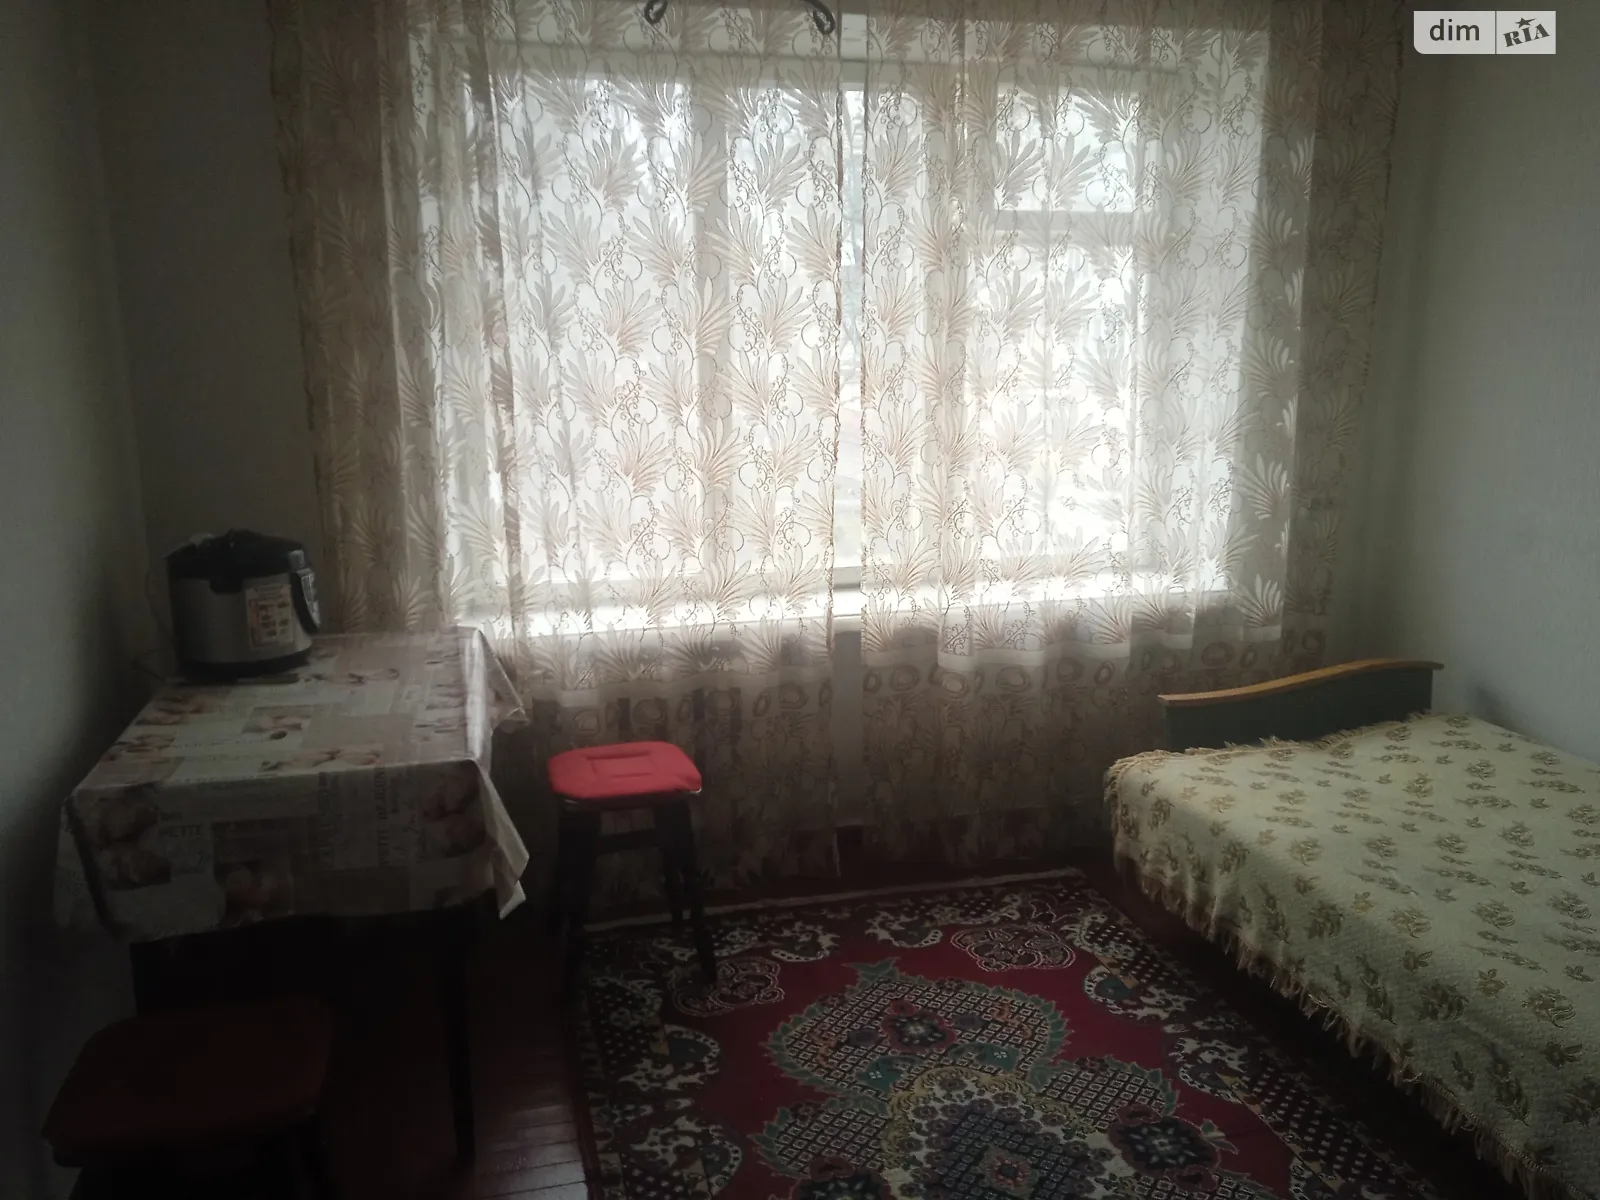 Продается комната 12 кв. м в Виннице, цена: 13000 $ - фото 1